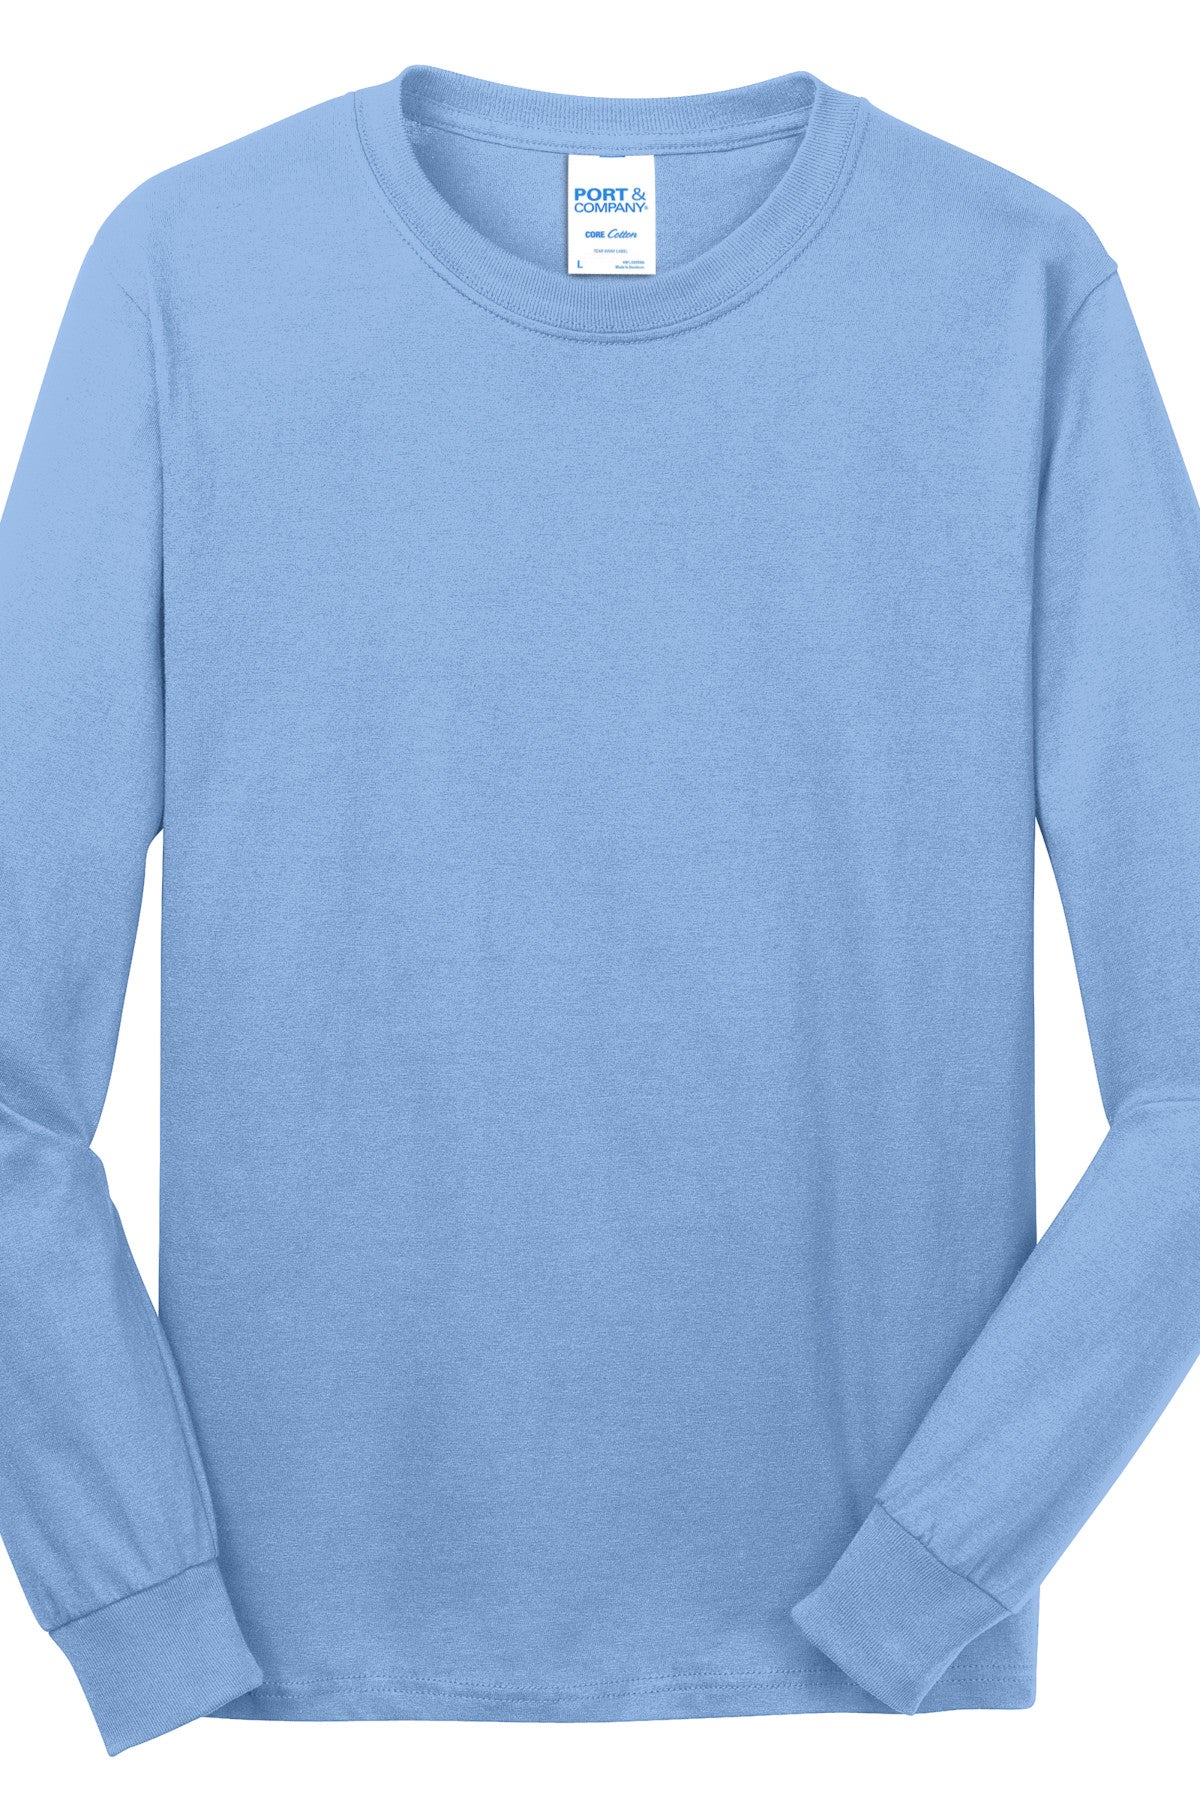 Port & Company® Pc54Ls Long Sleeve Cotton T-Shirt Ad Small / Light Blue